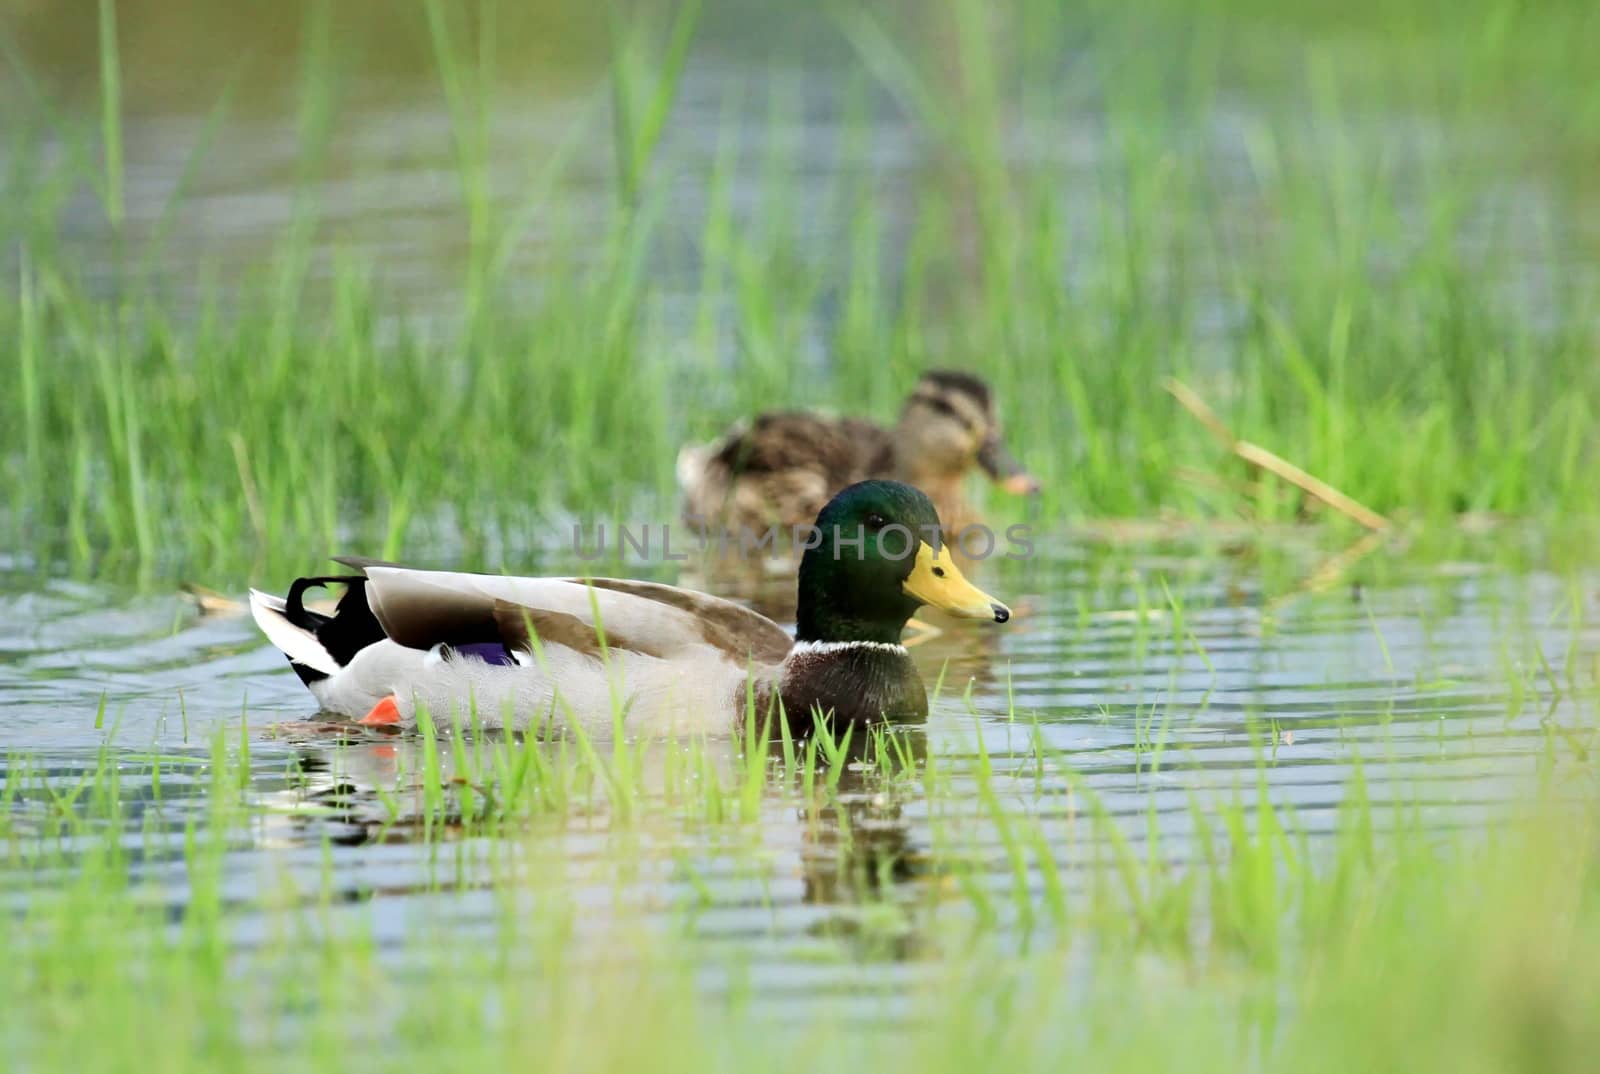 Mallard ducks on a pond by Elenaphotos21